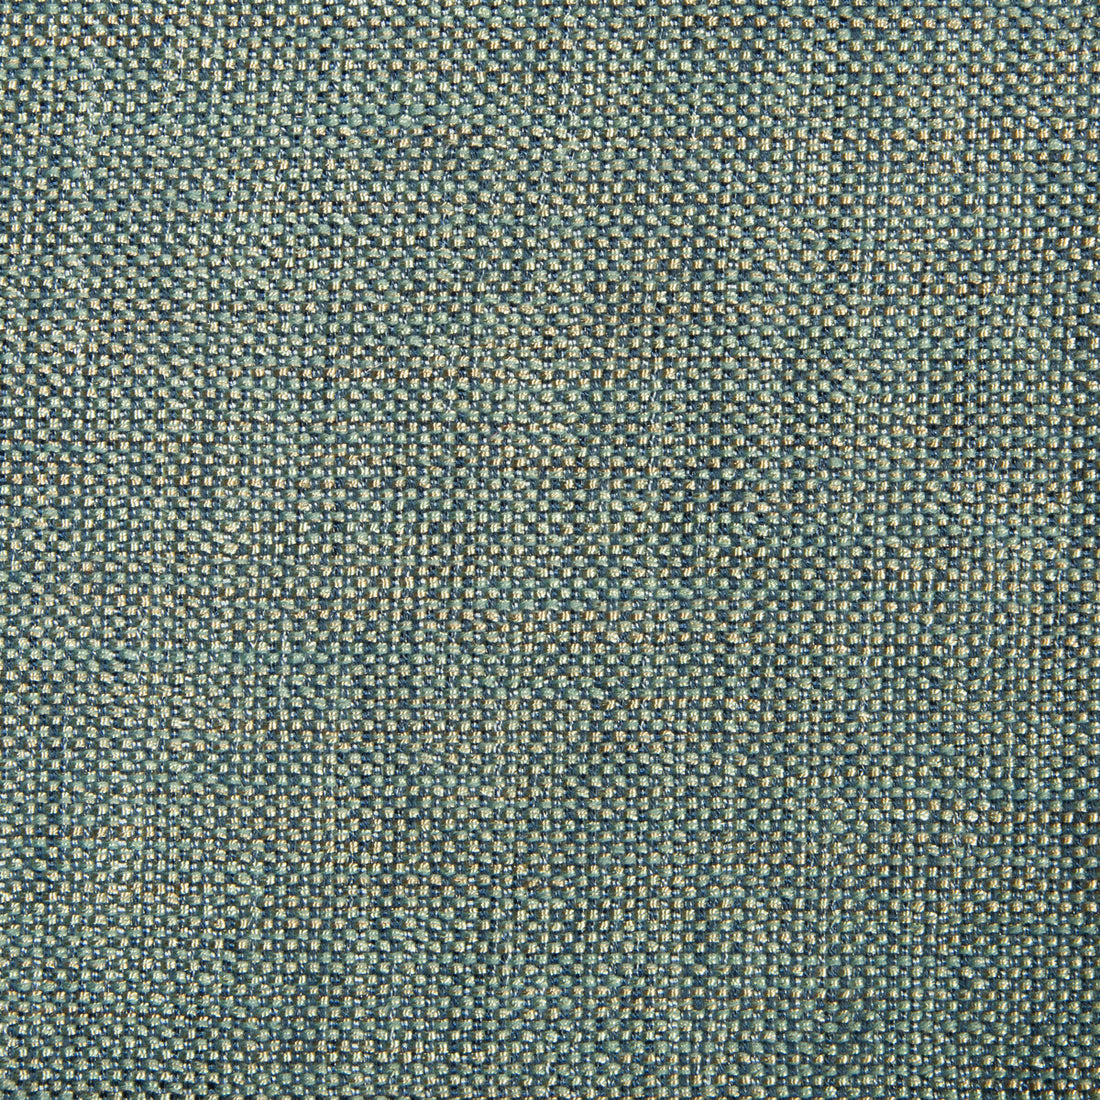 Kravet Smart fabric in 34939-515 color - pattern 34939.515.0 - by Kravet Smart